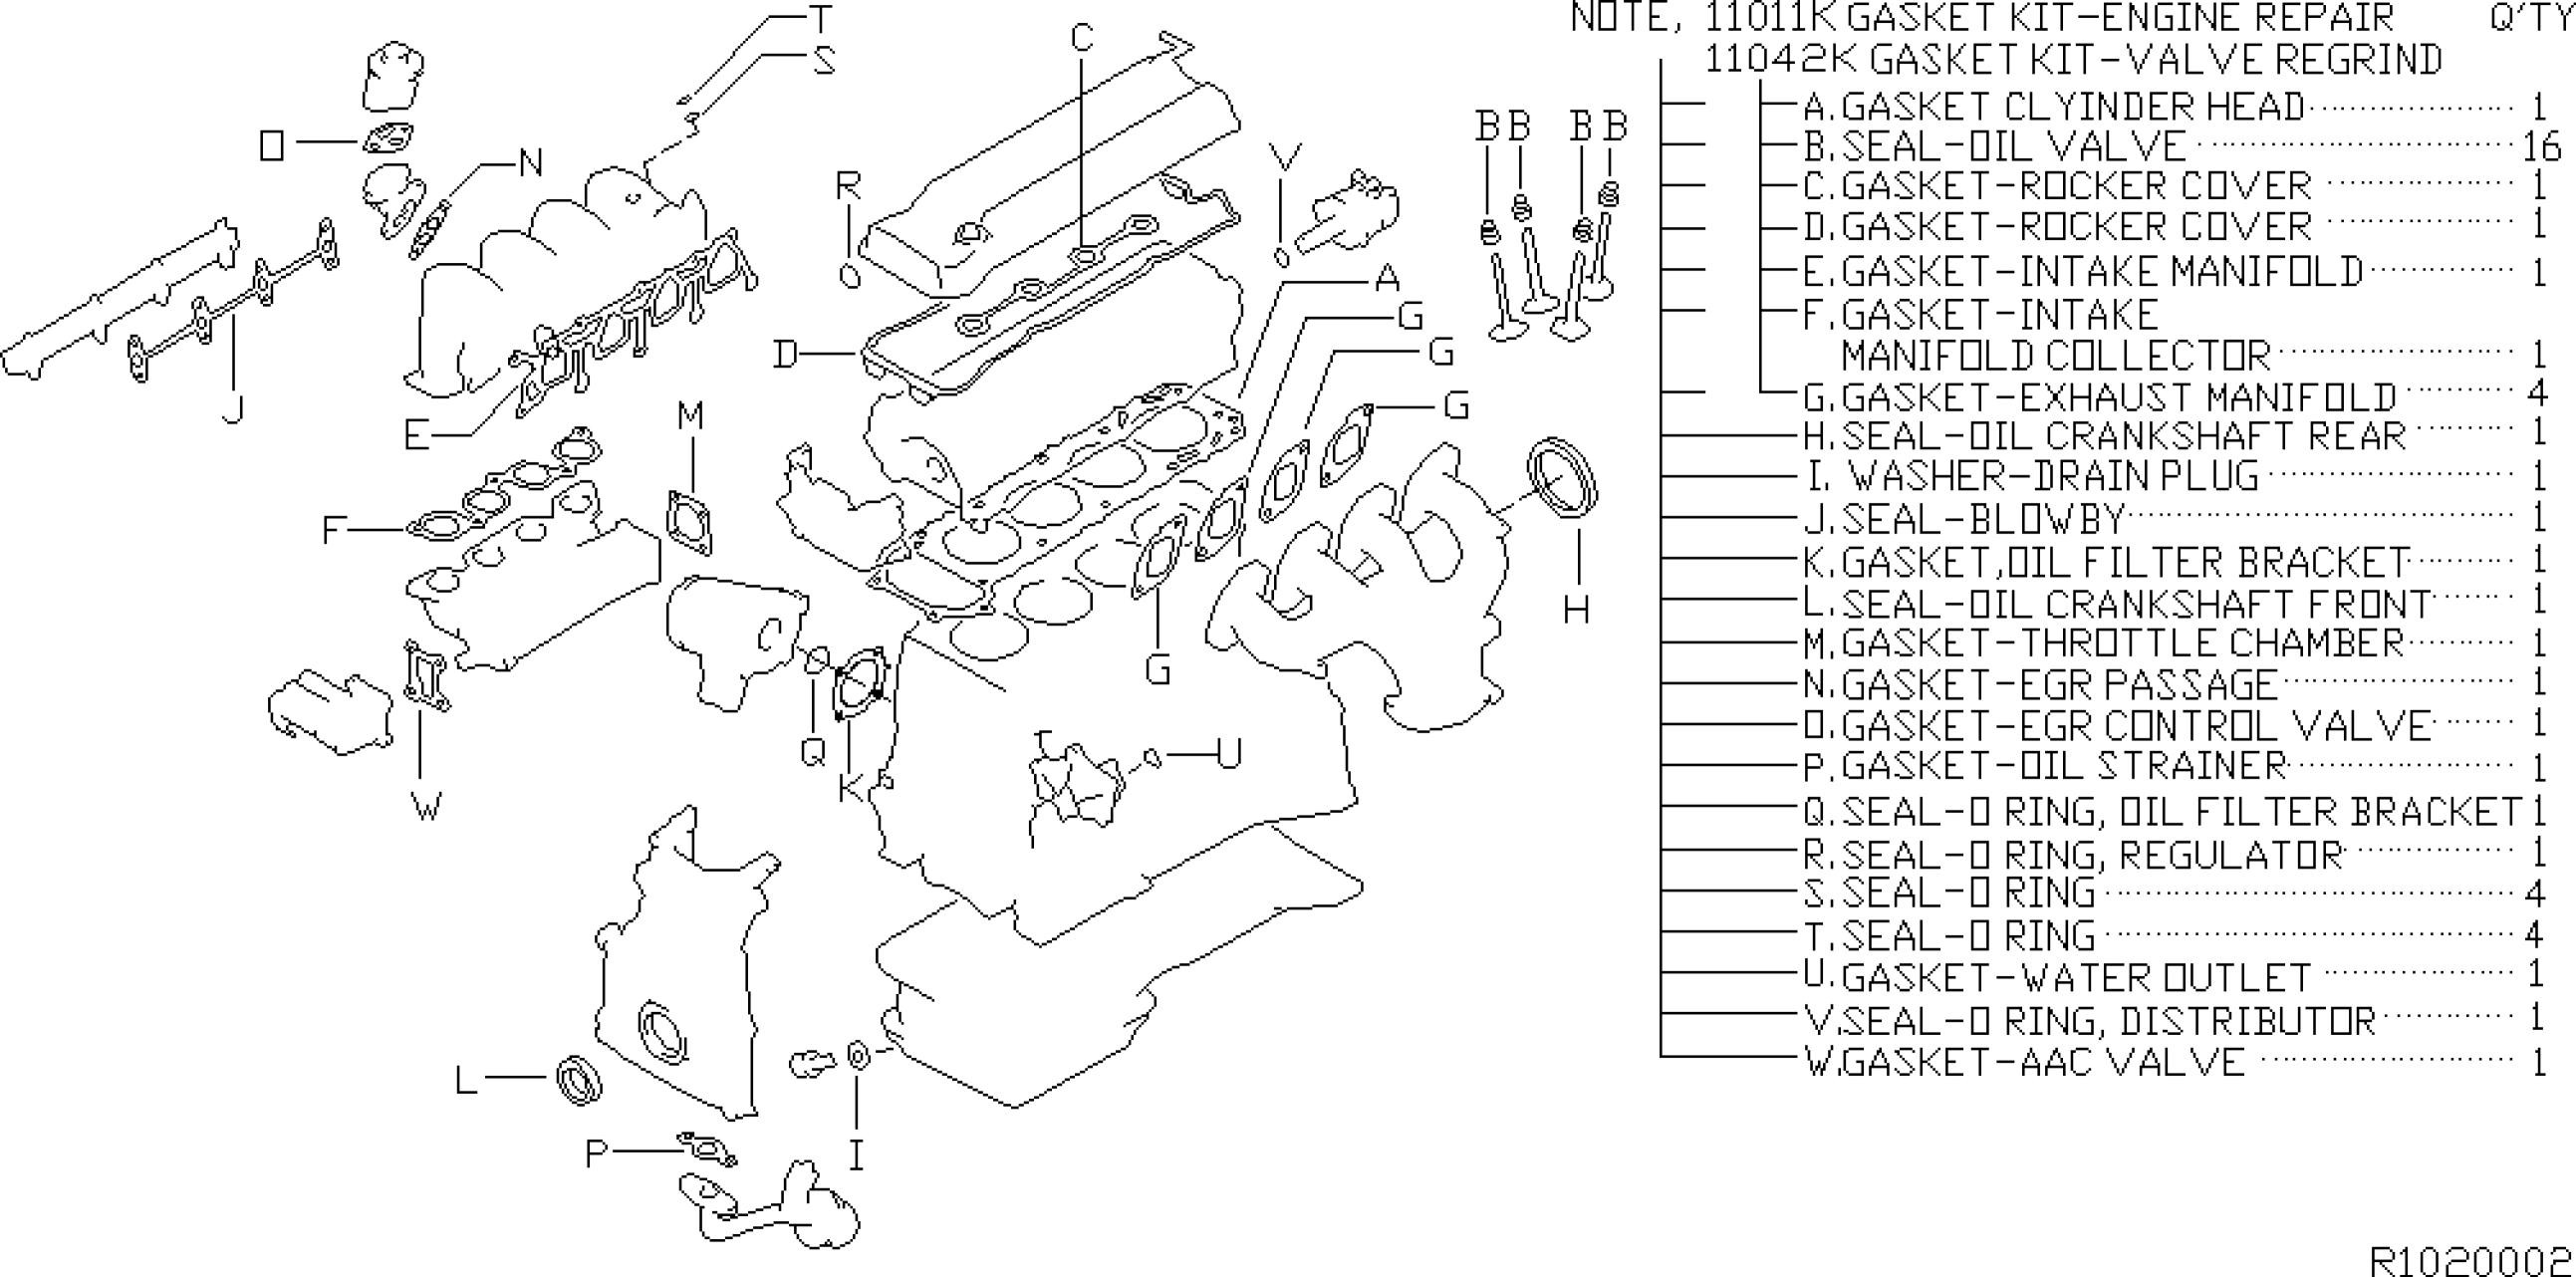 1998 Nissan Altima Engine Diagram 2003 Nissan Altima 2 5 Fuse Box Diagram Reinvent Your Wiring Diagram • Of 1998 Nissan Altima Engine Diagram